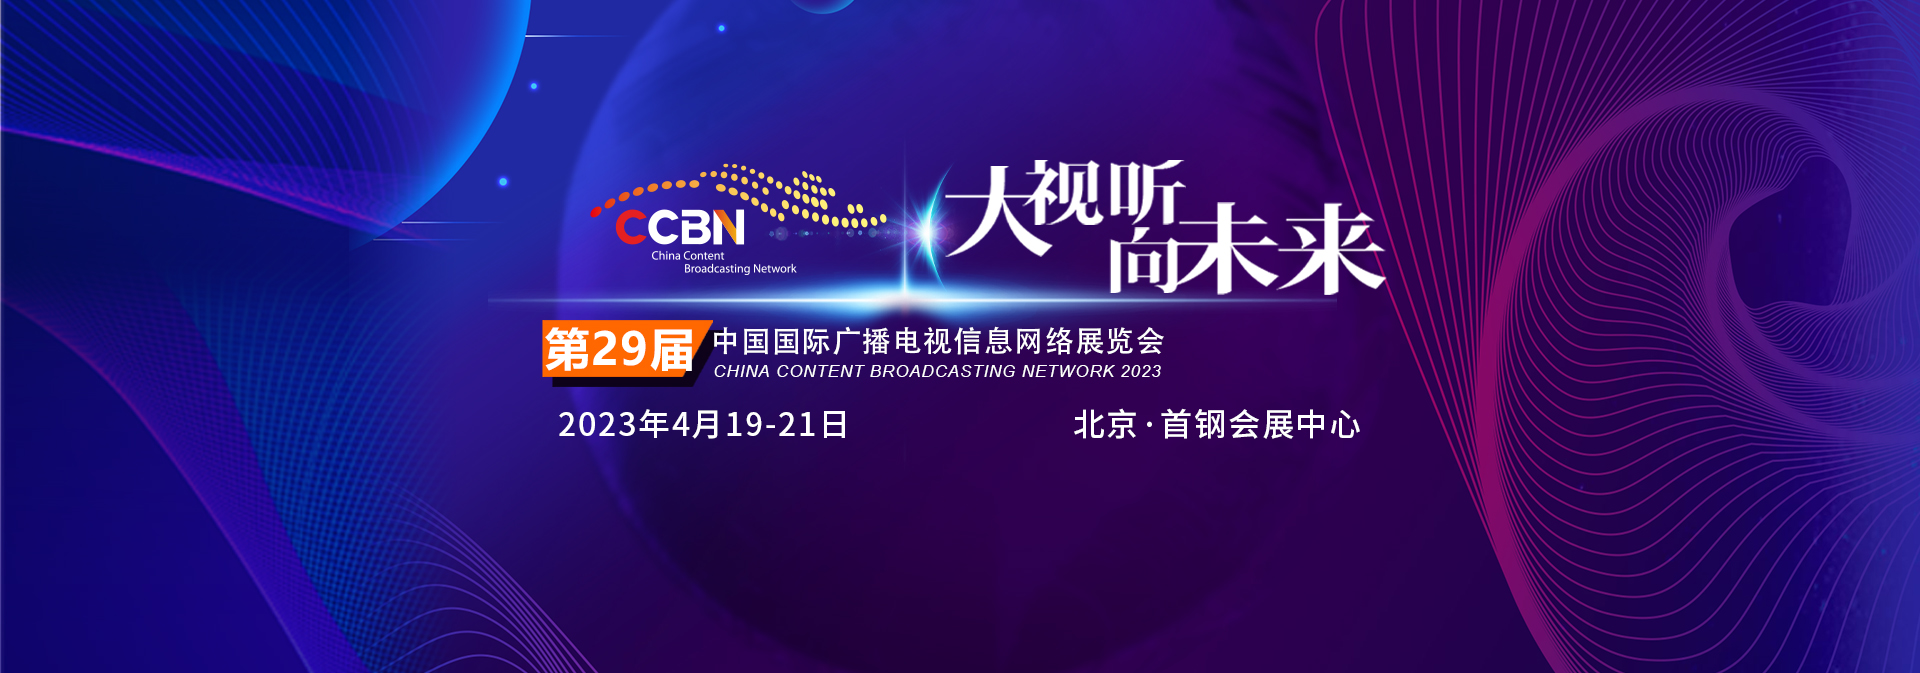 CCBN展会邀请 ▏4月19-21日北京艾科密与您相约北京首钢园